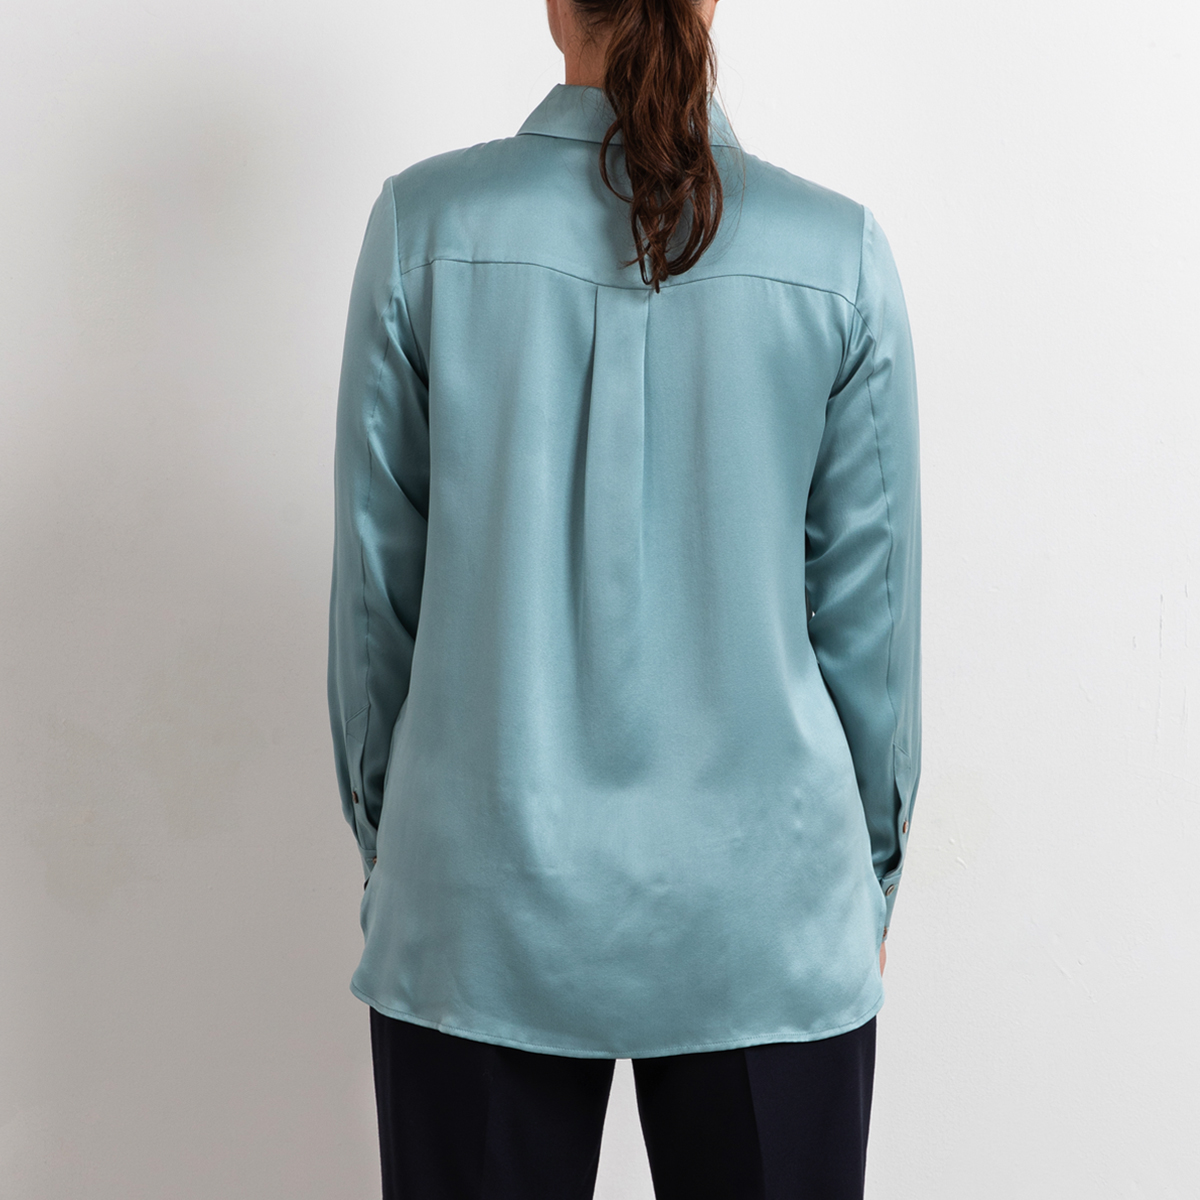 Essential silk shirt in stone blue colour by Studio Heijne